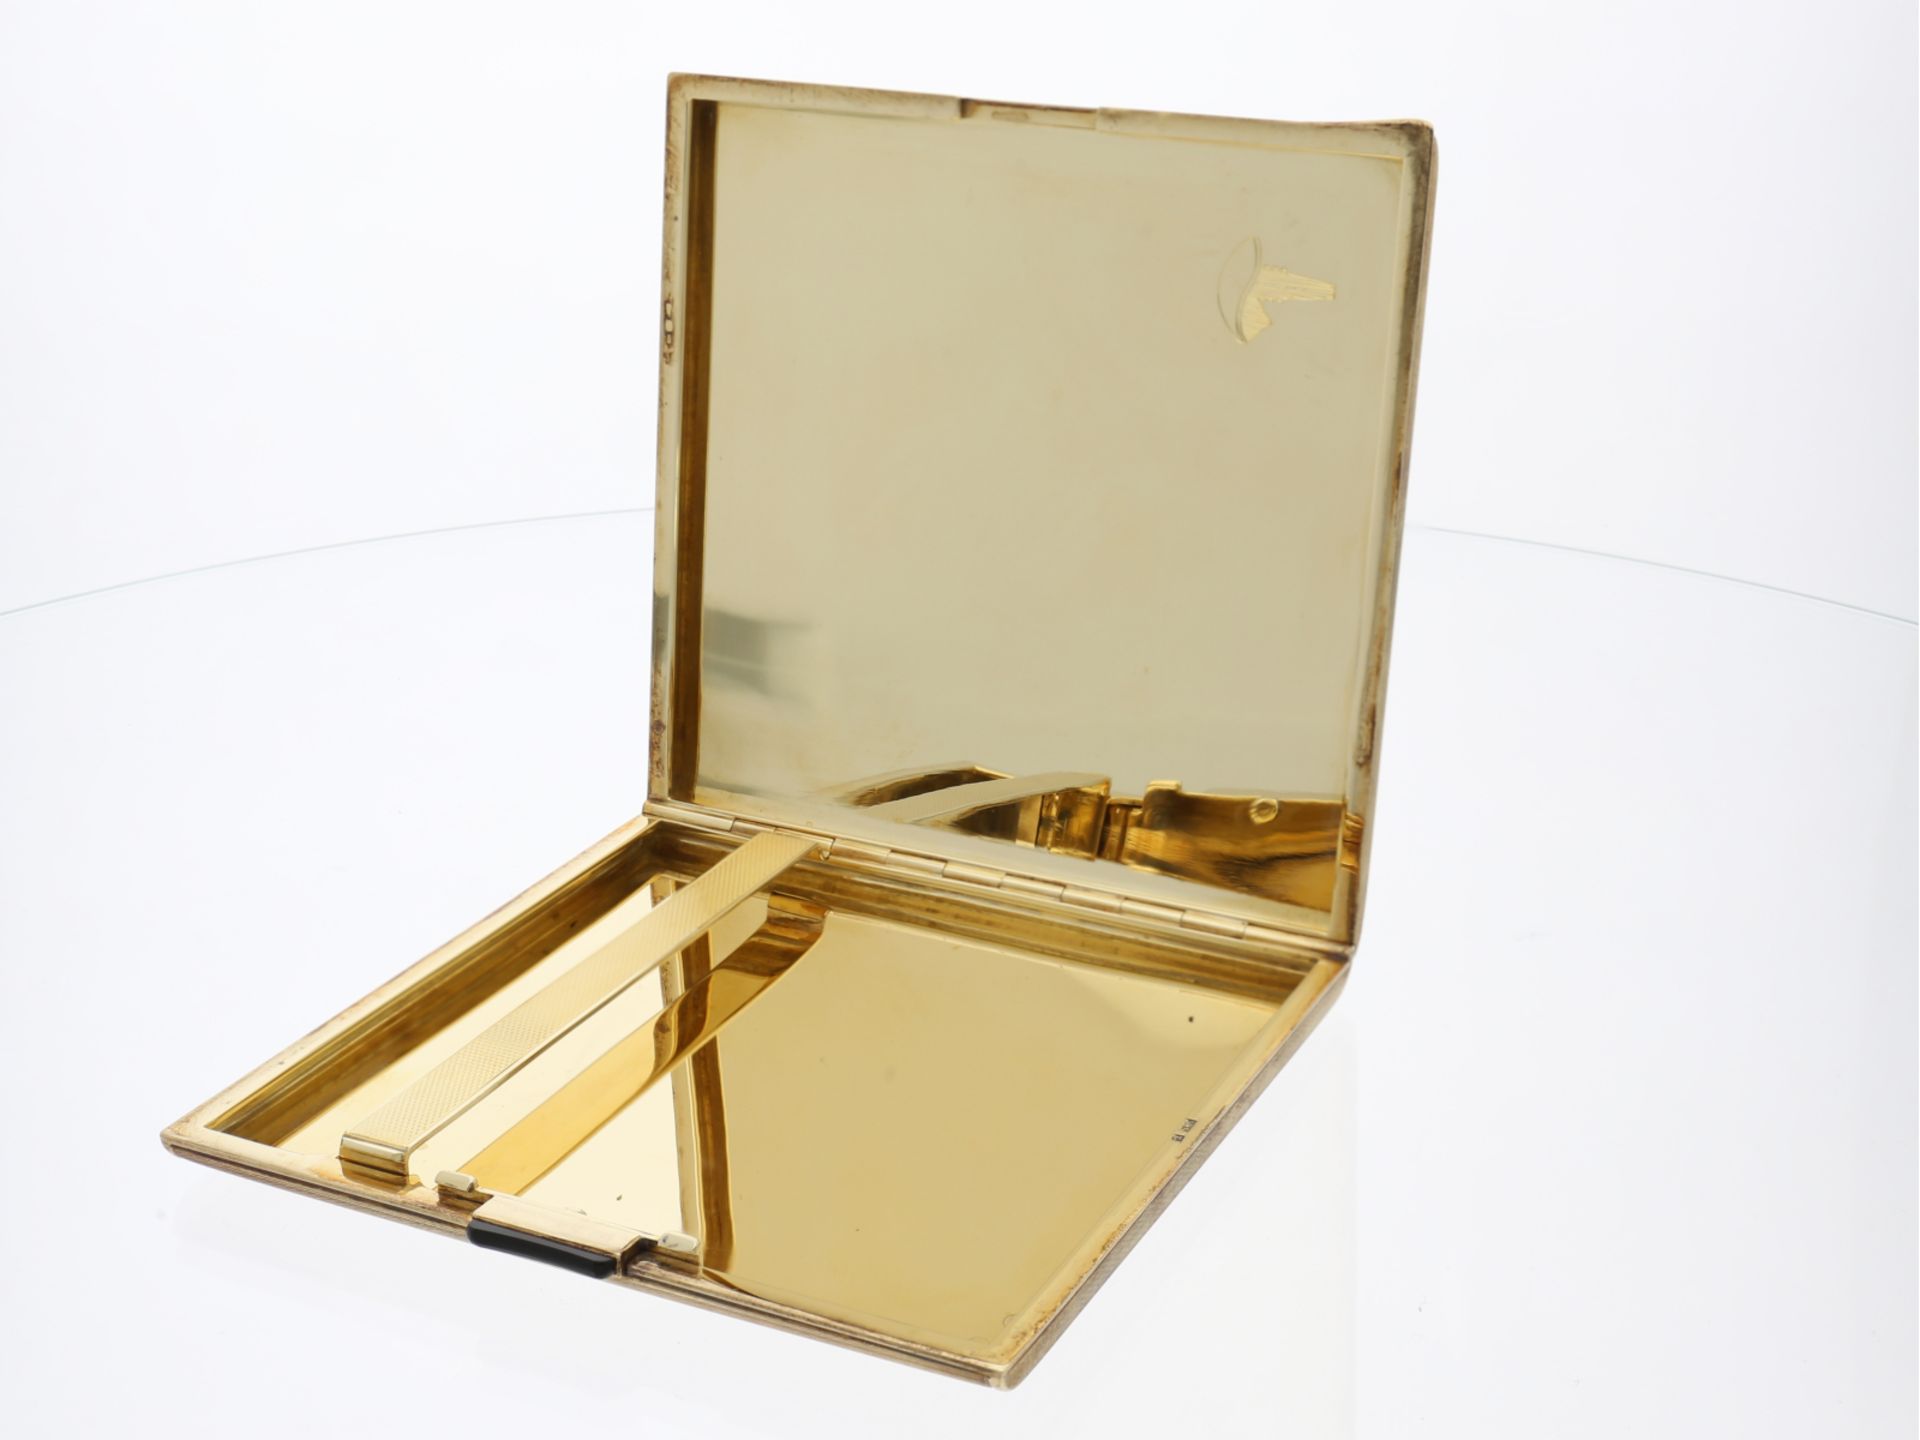 Äußerst luxuriöses goldenes Zigarettenetui, Weyersberg Königsallee Düsseldorf, um 1950, Originalbox - Image 2 of 2